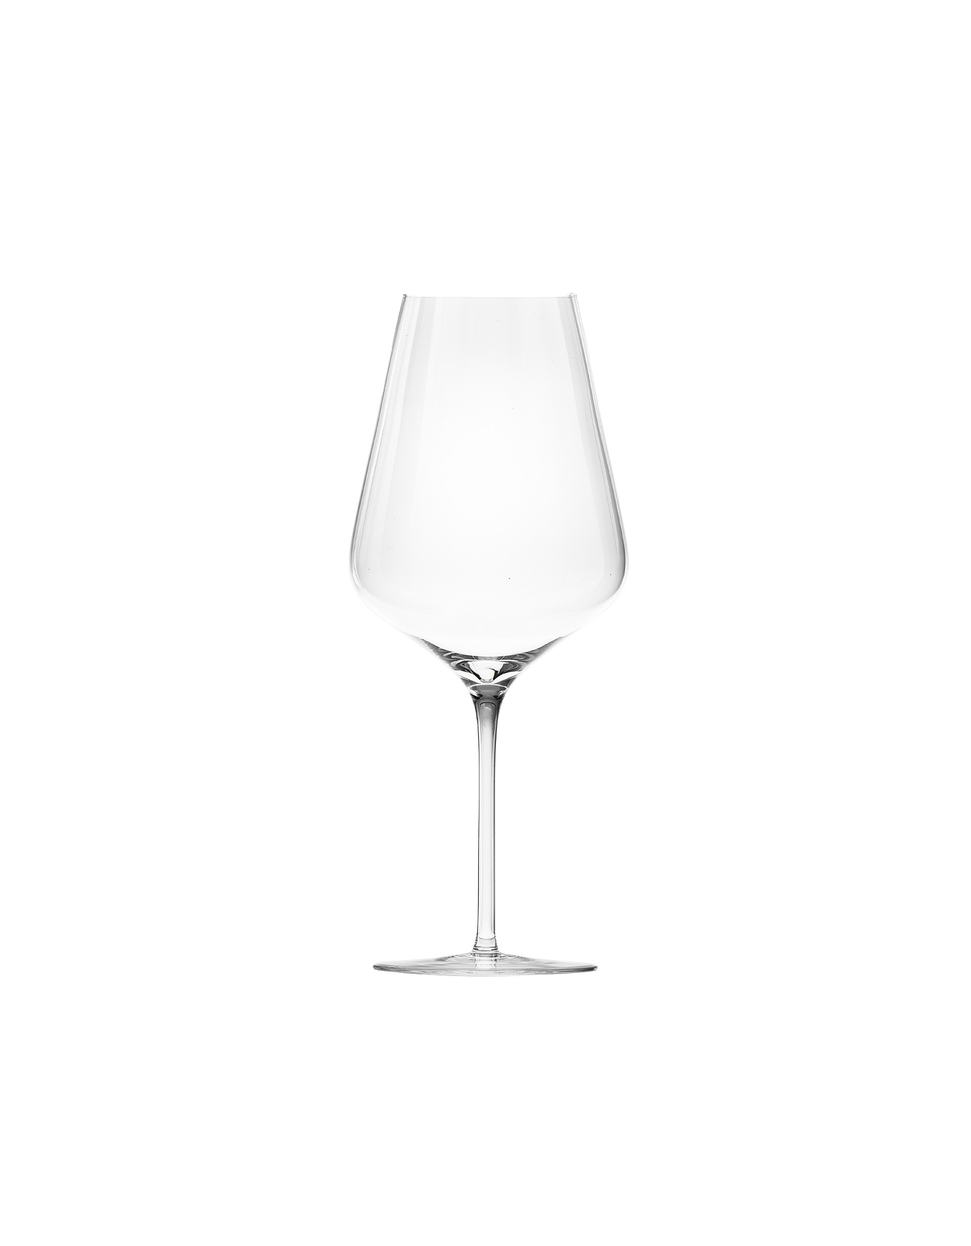 Oeno wine glass, 620 ml